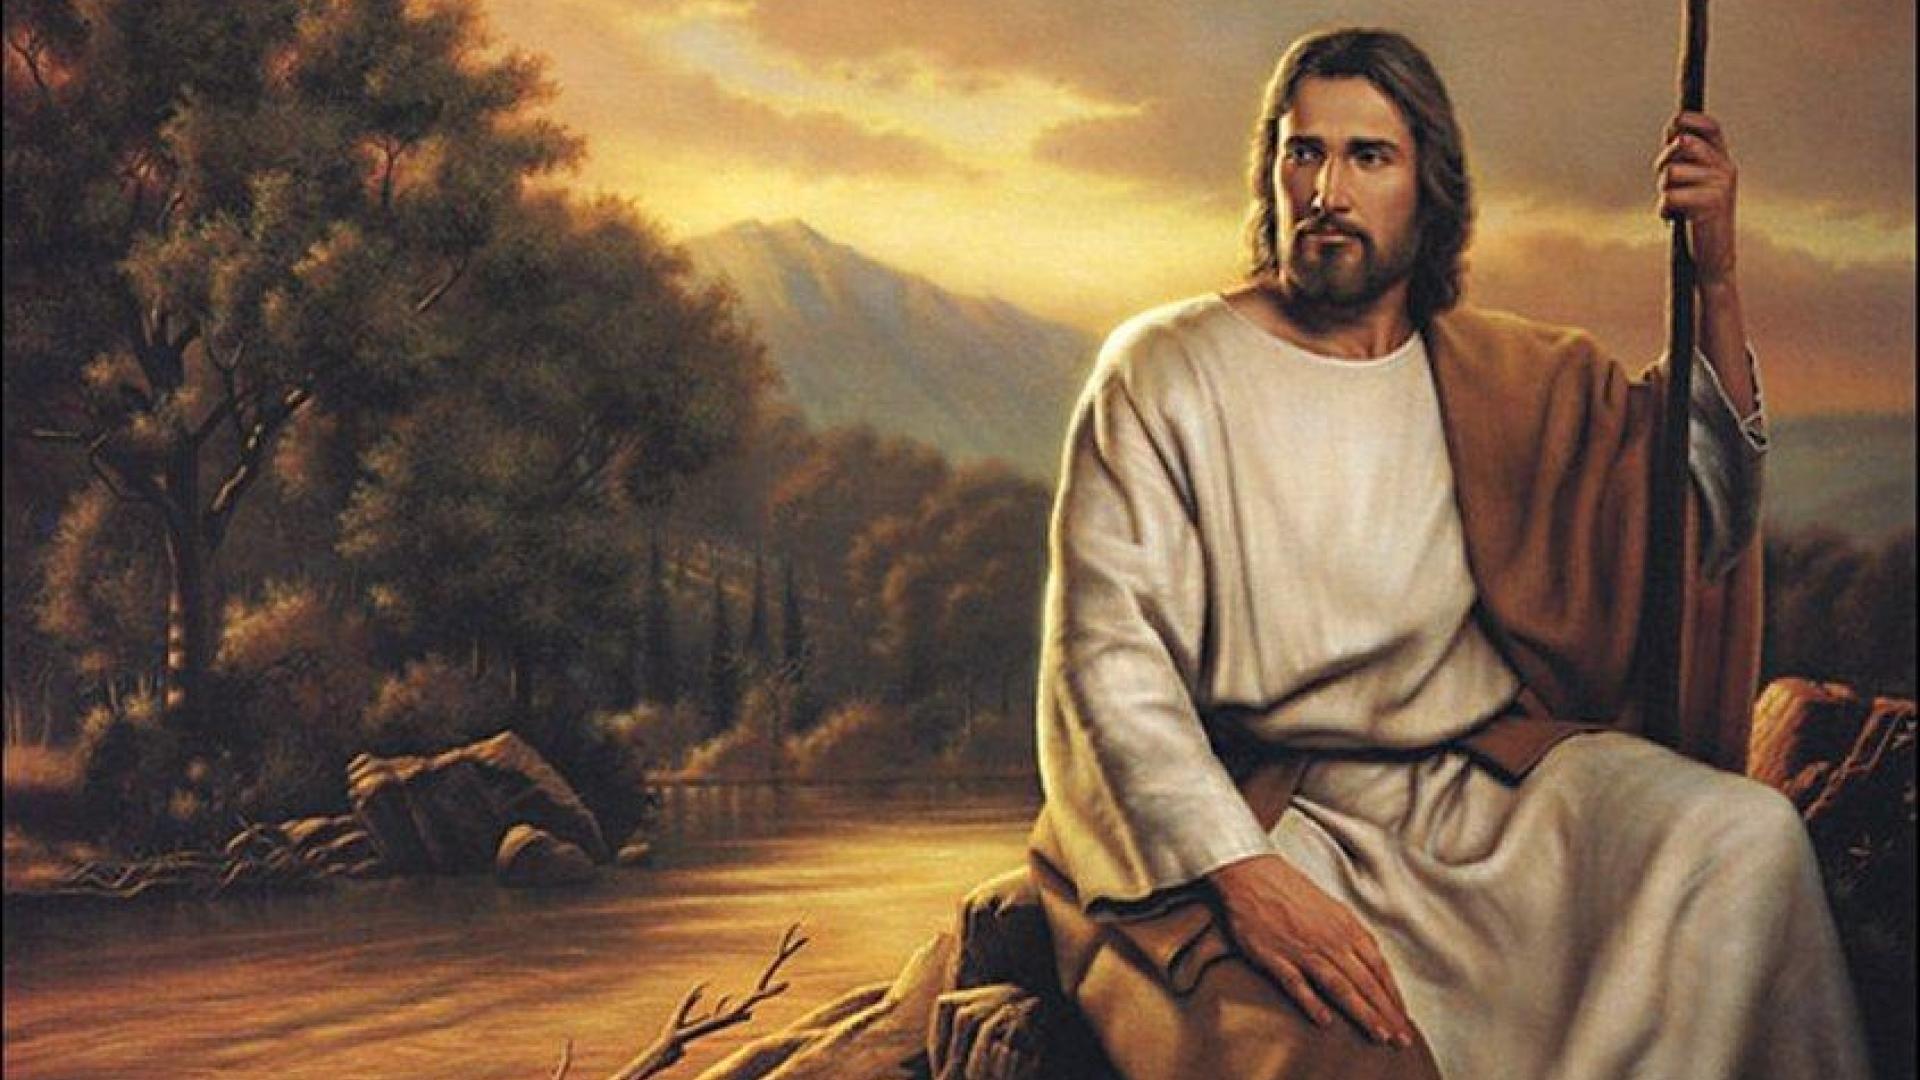 Jesus HD Wallpaper, Jesus Picture For Background, New Wallpaper